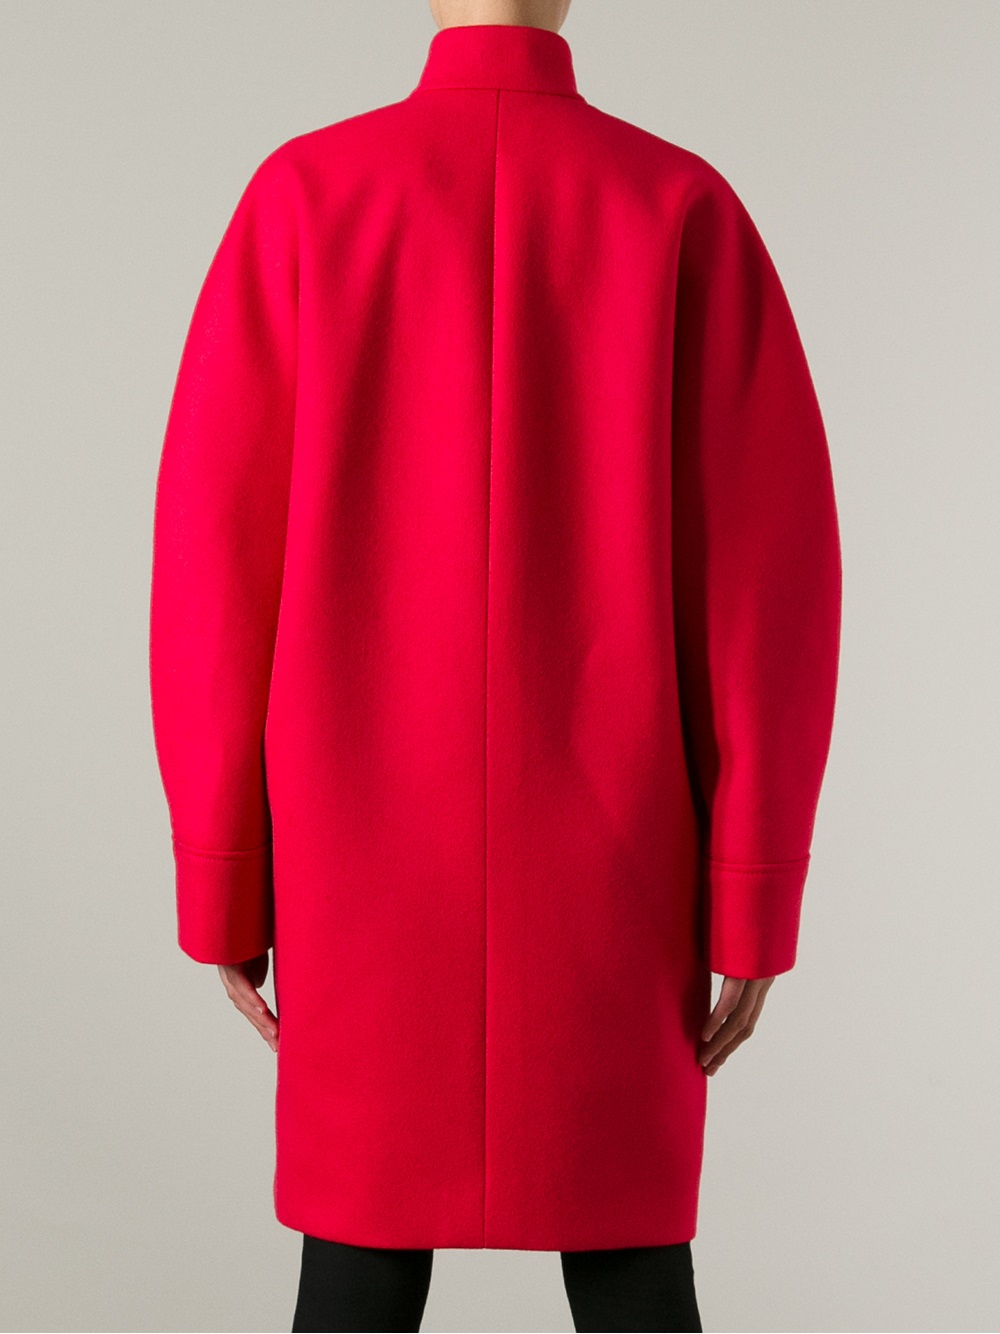 Balenciaga Wool Cocoon Coat in Red - Lyst